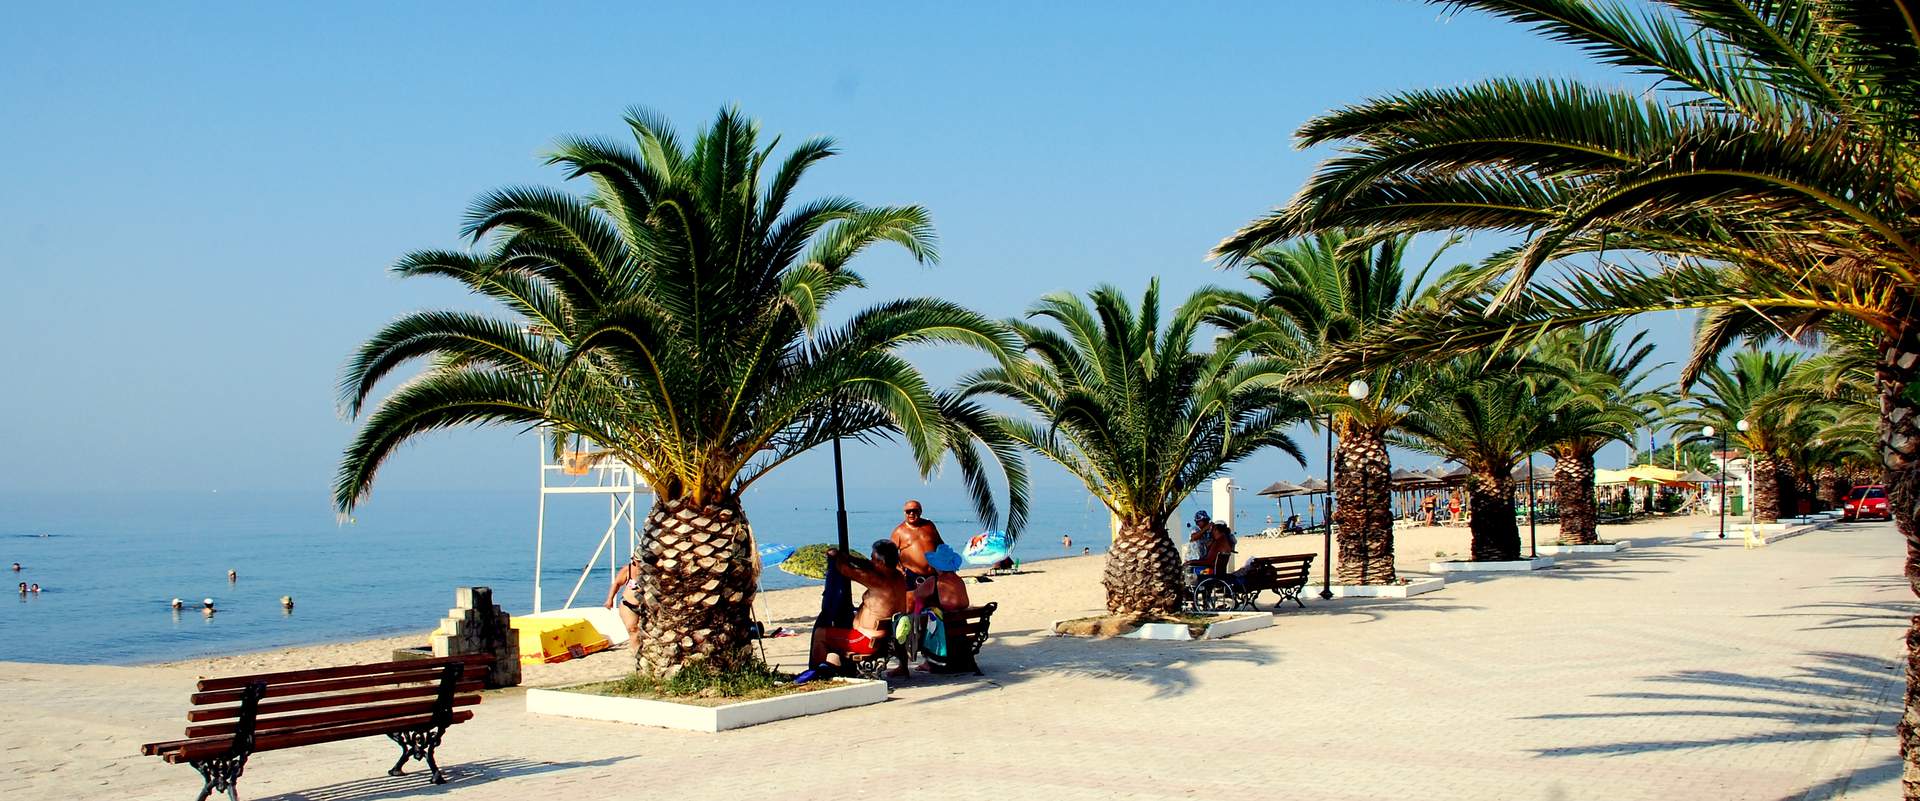 Nea Plagia beach, Halkidiki, Greece